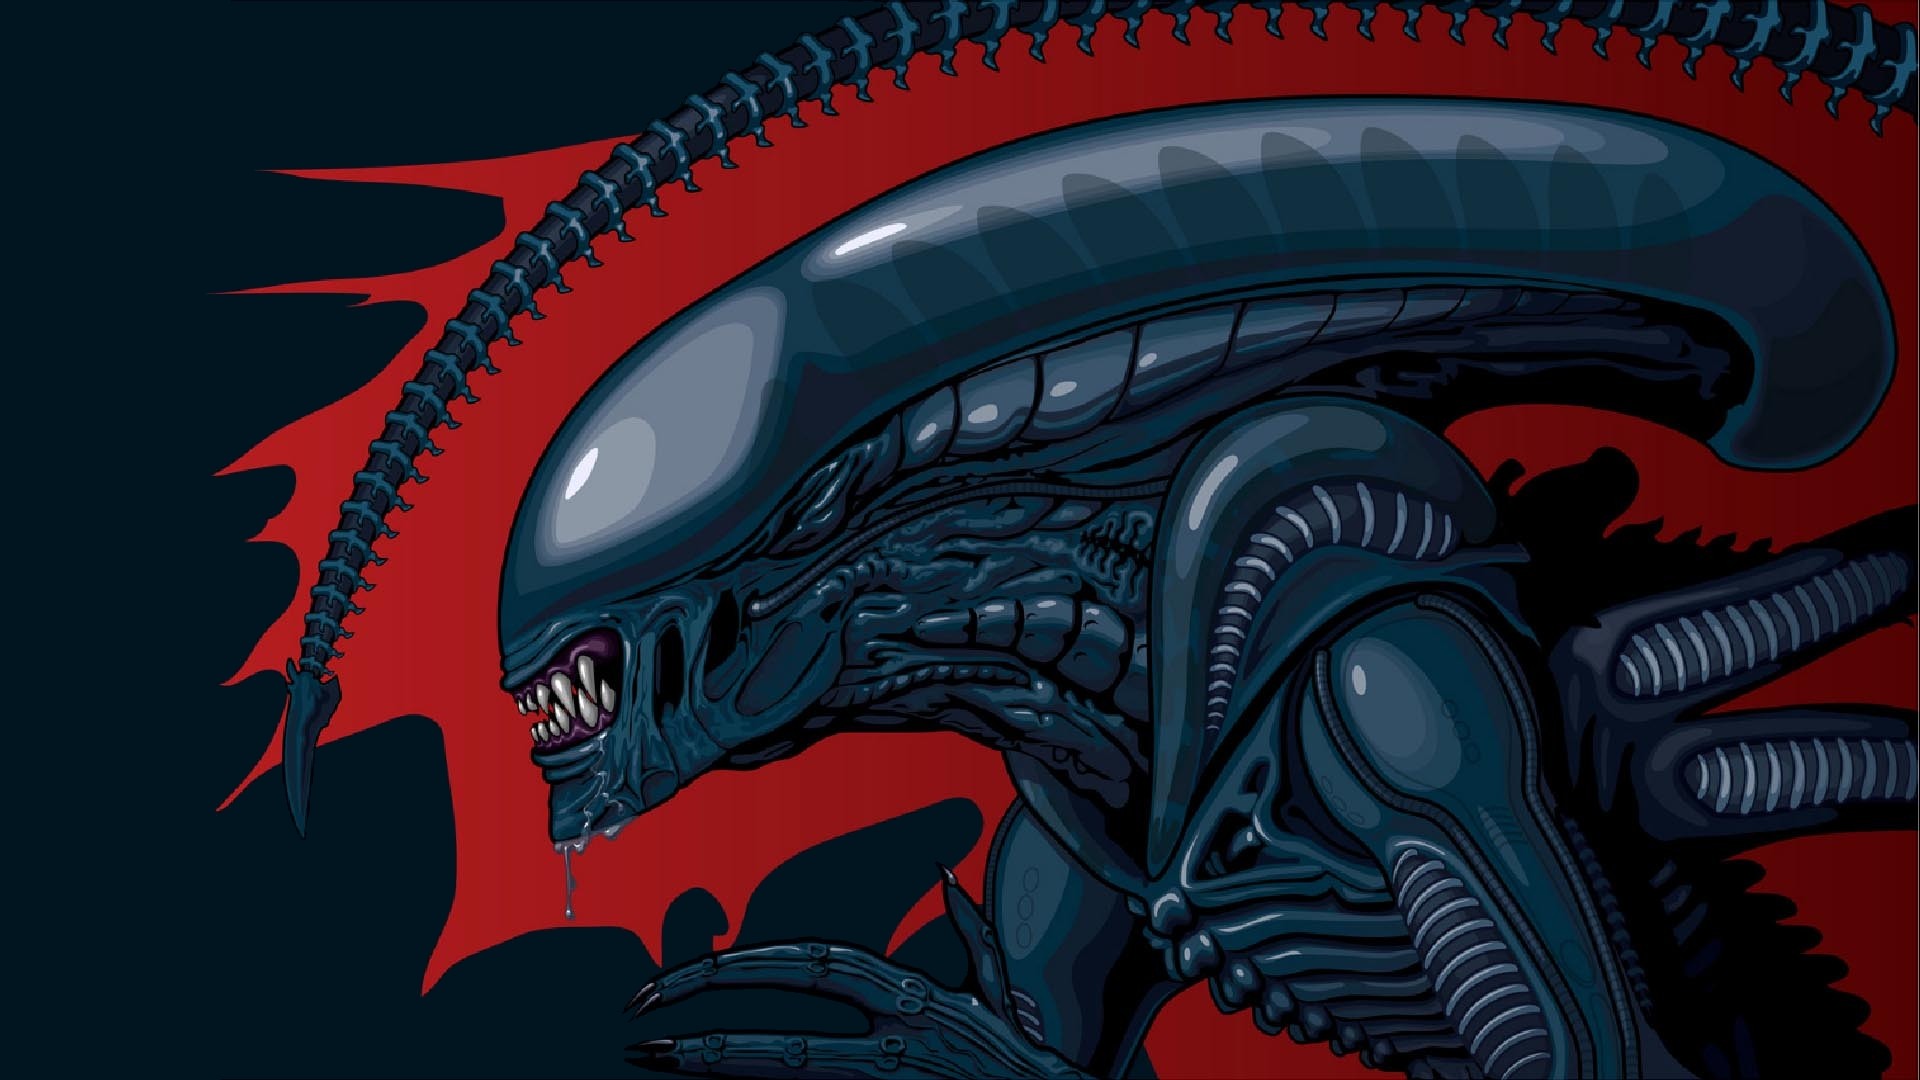 General 1920x1080 Xenomorph aliens artwork Alien (Creature) science fiction horror movie characters